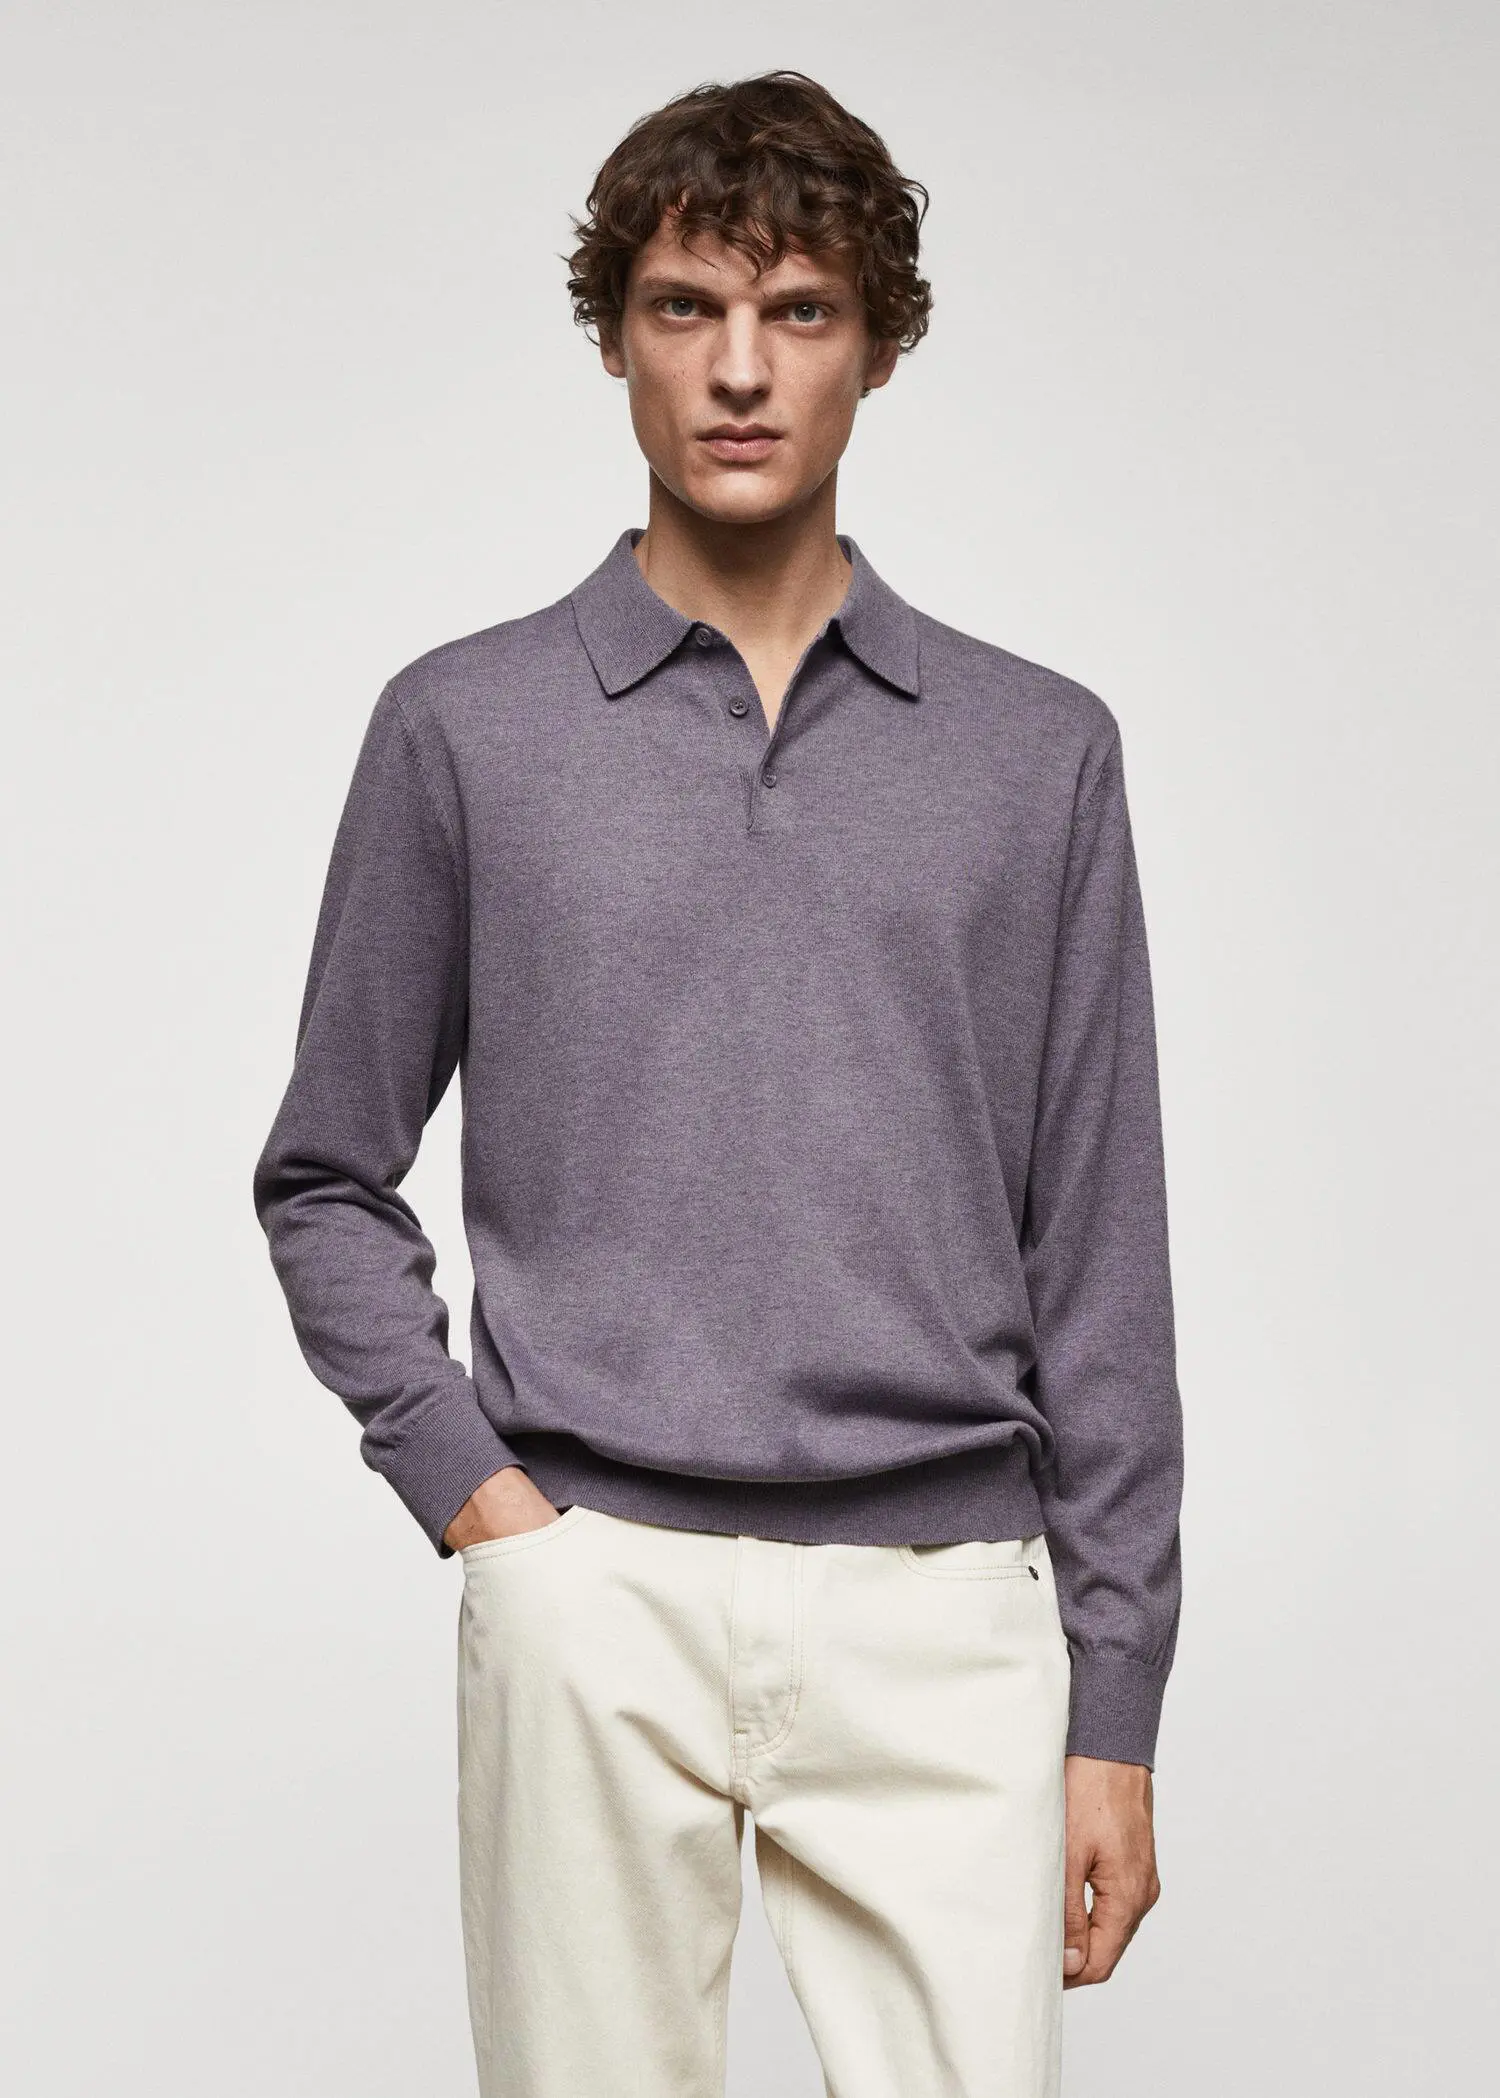 Mango Long-sleeved cotton jersey polo shirt. 2